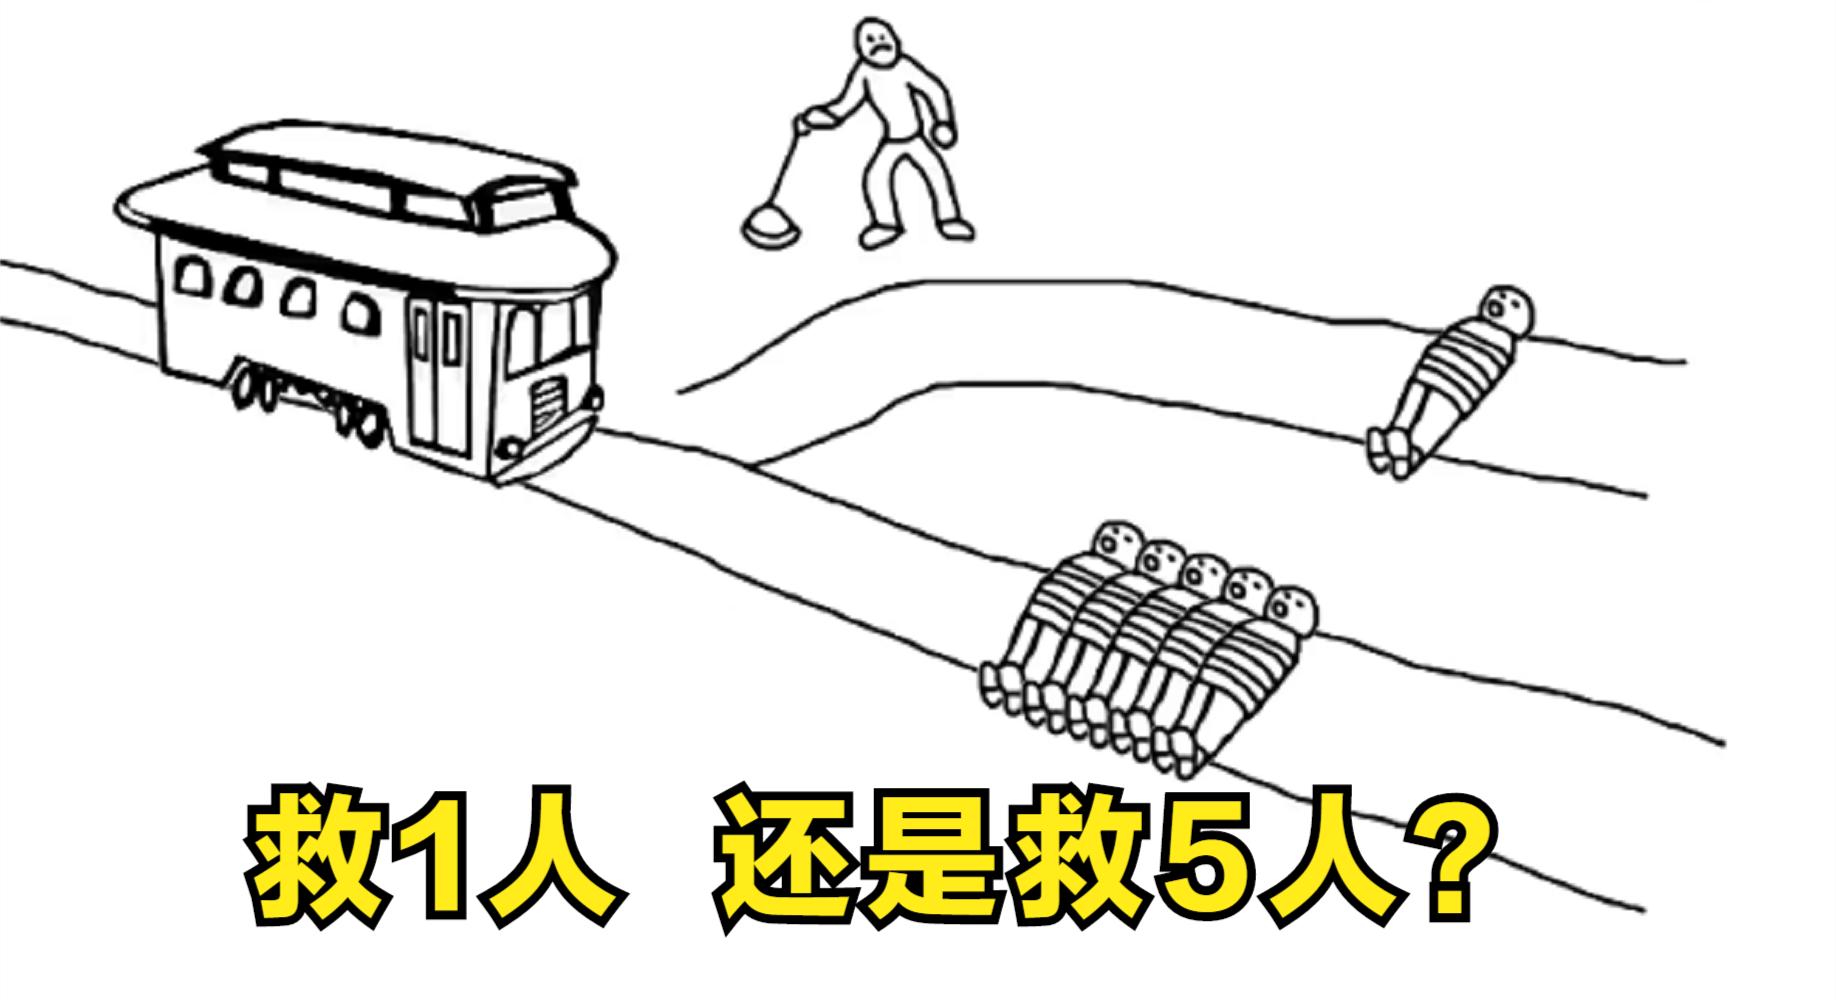 z4火车5车厢座位分布图图片